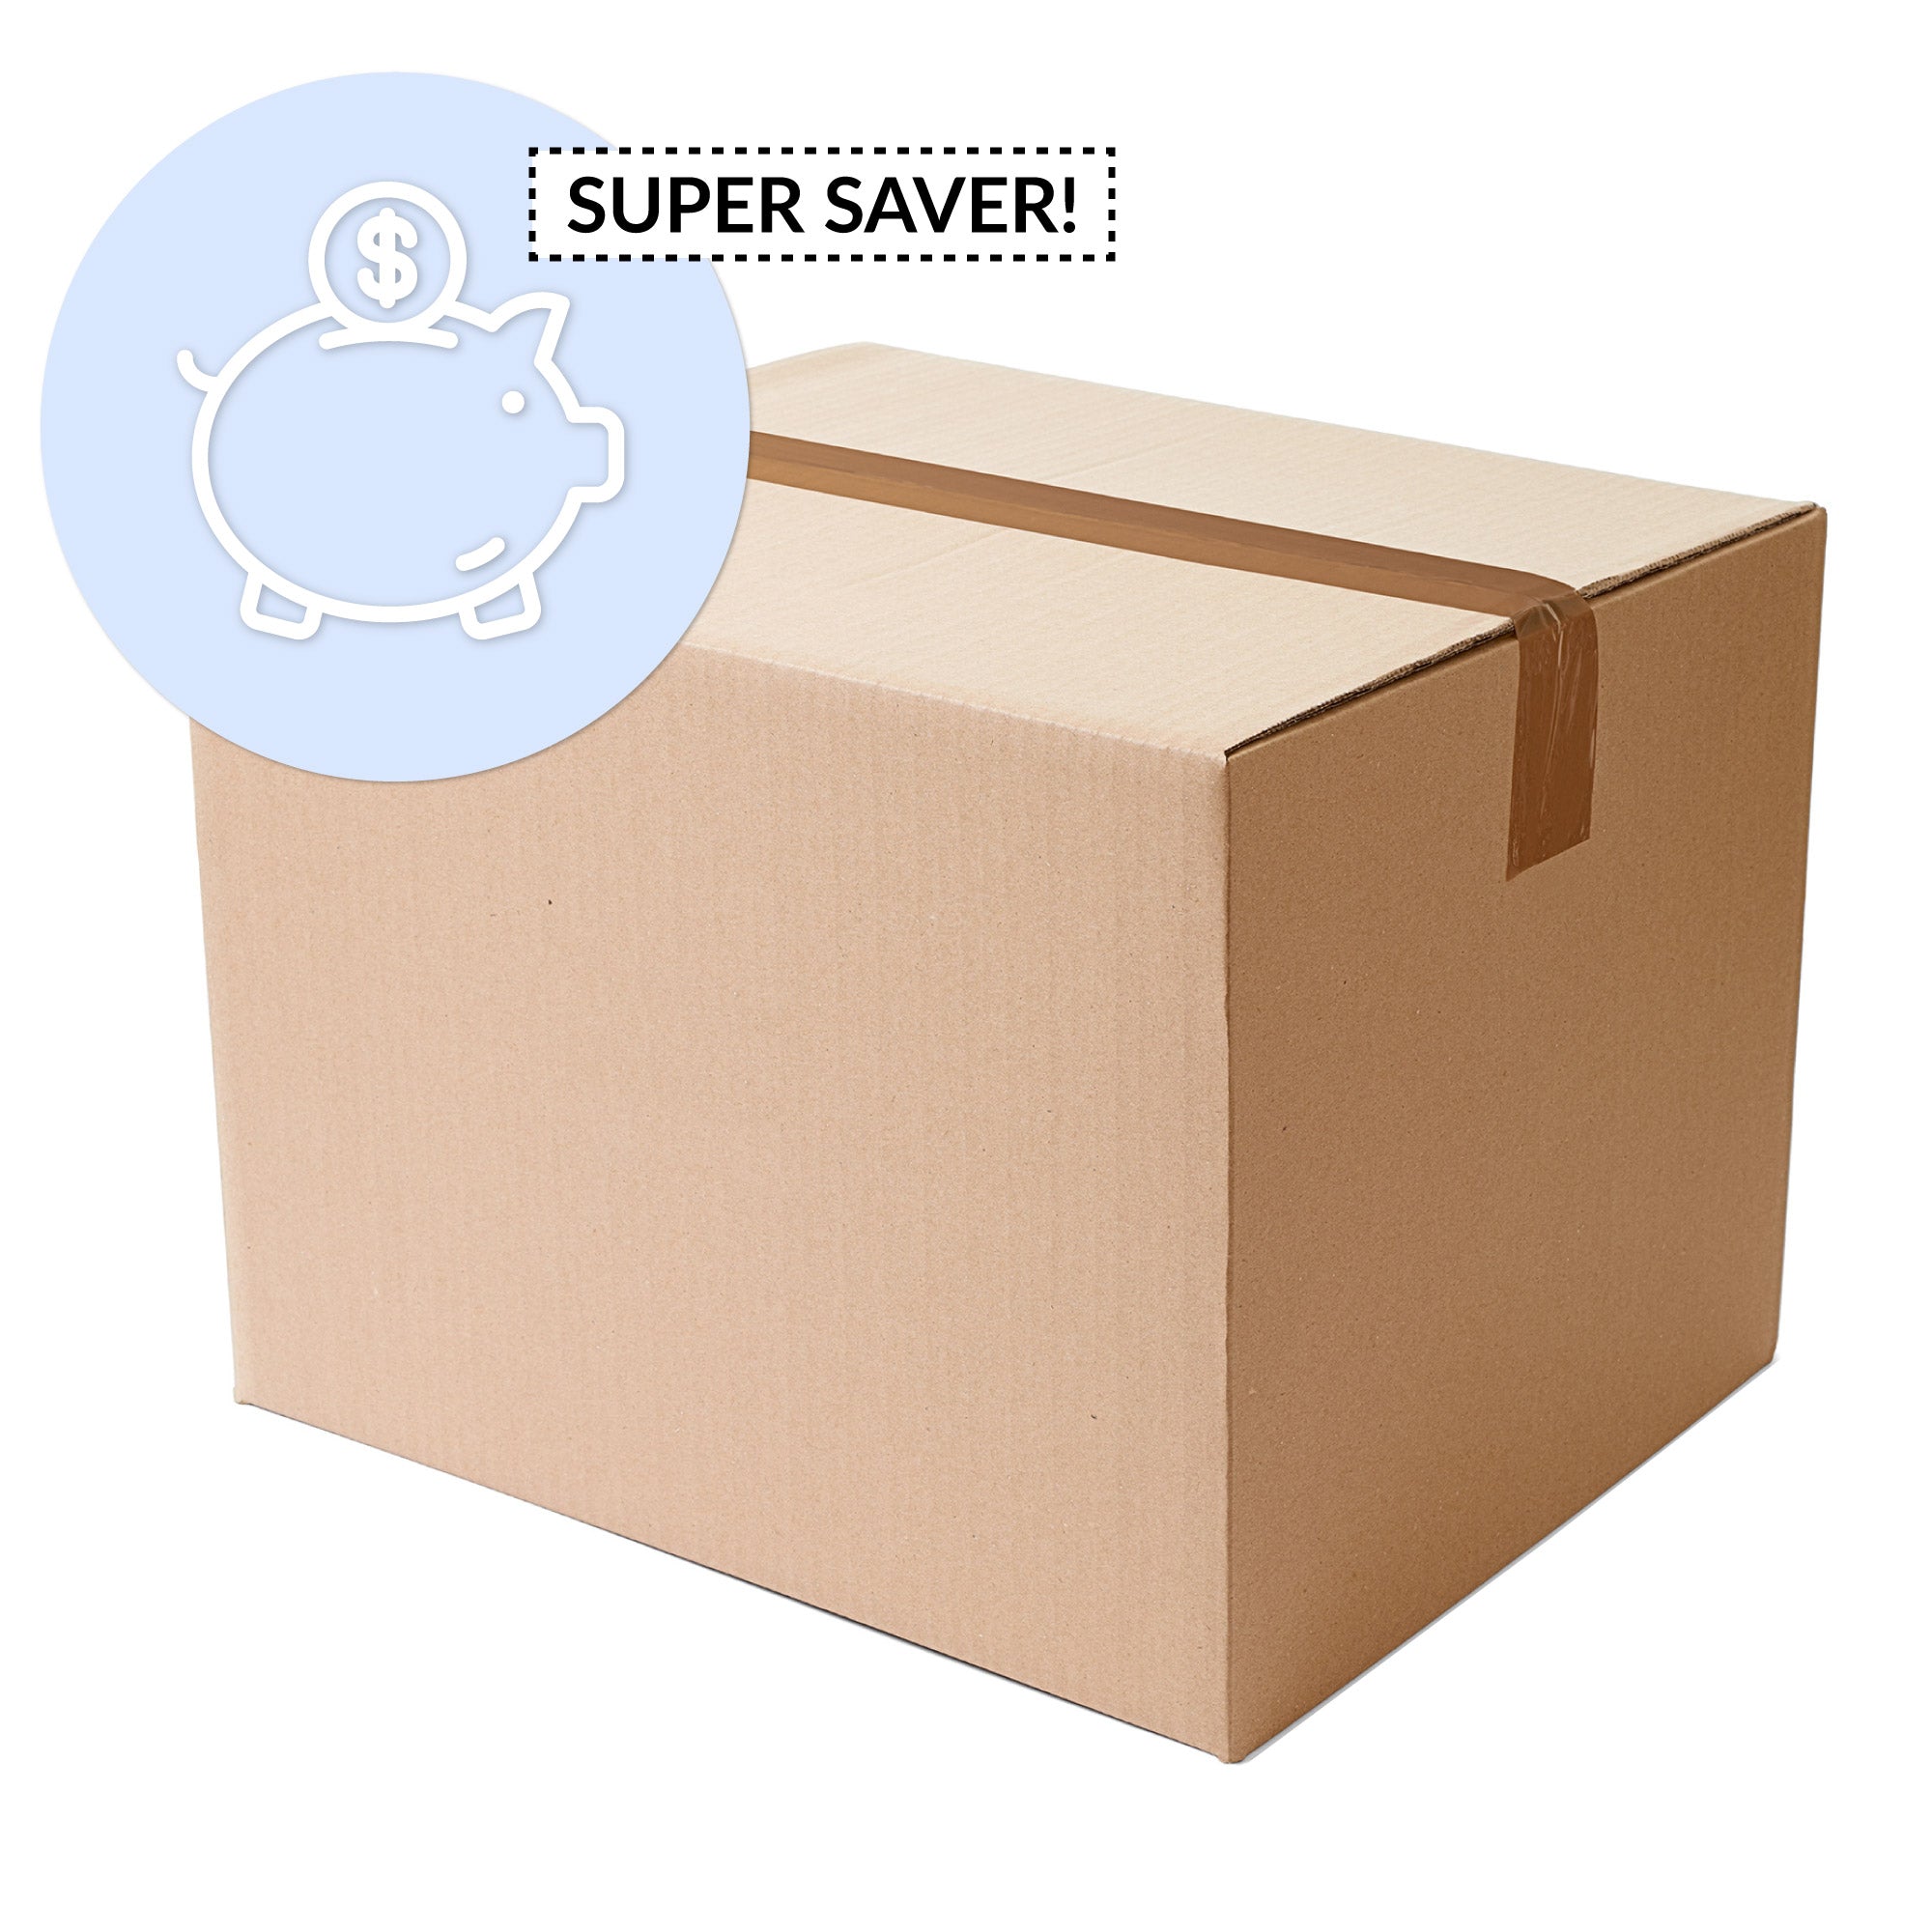 Super Saver Boxes